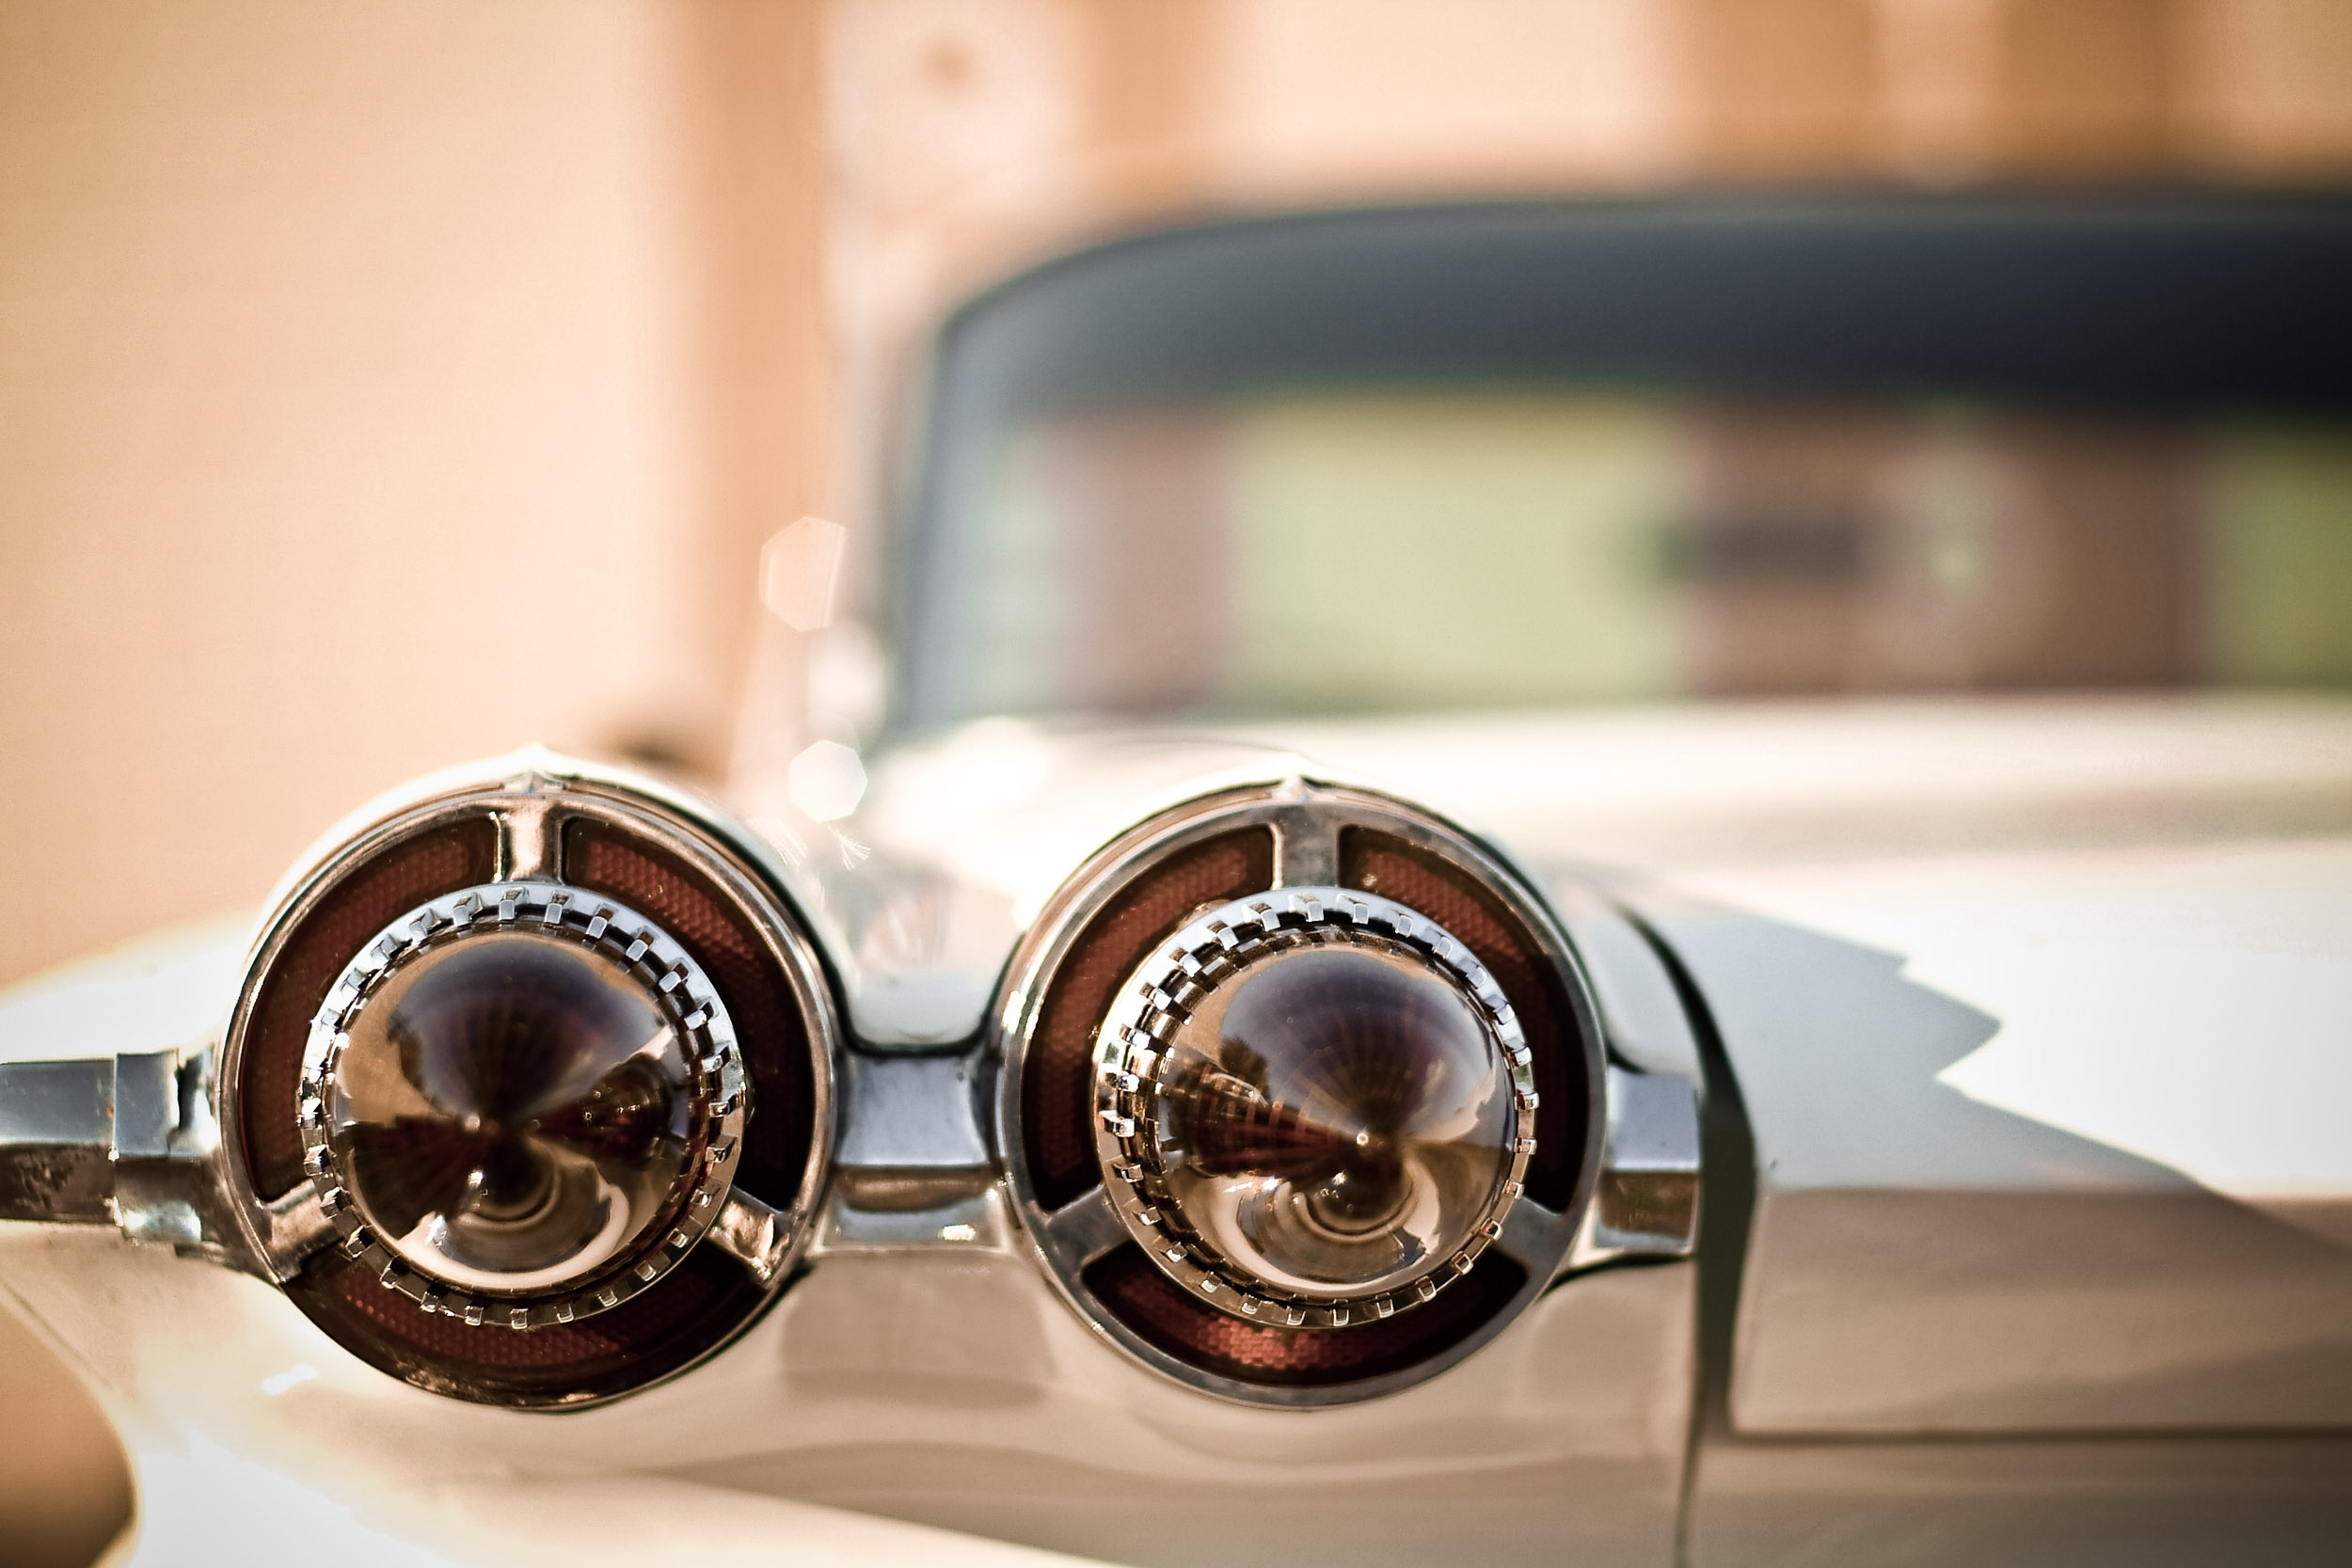 A vintage automobile sports its futuristic rear headlamps in Austin